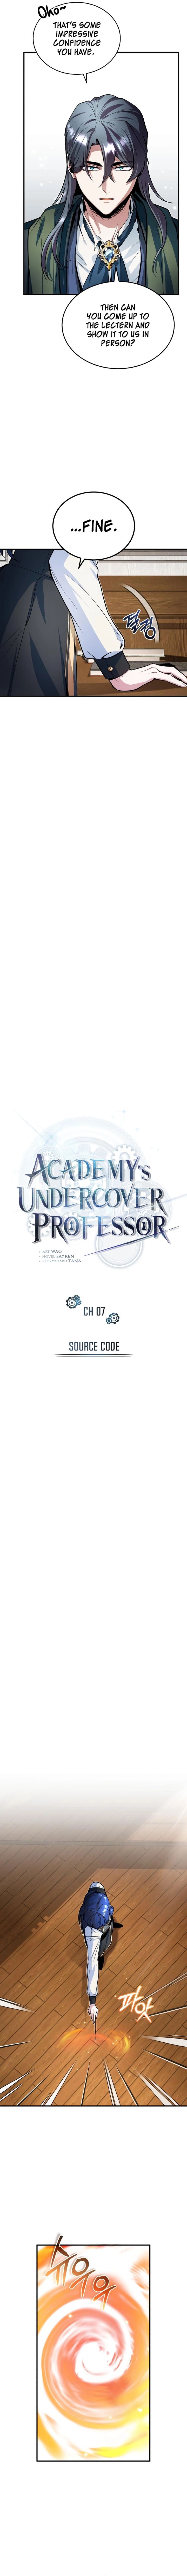 Academys Undercover Professor 7 4